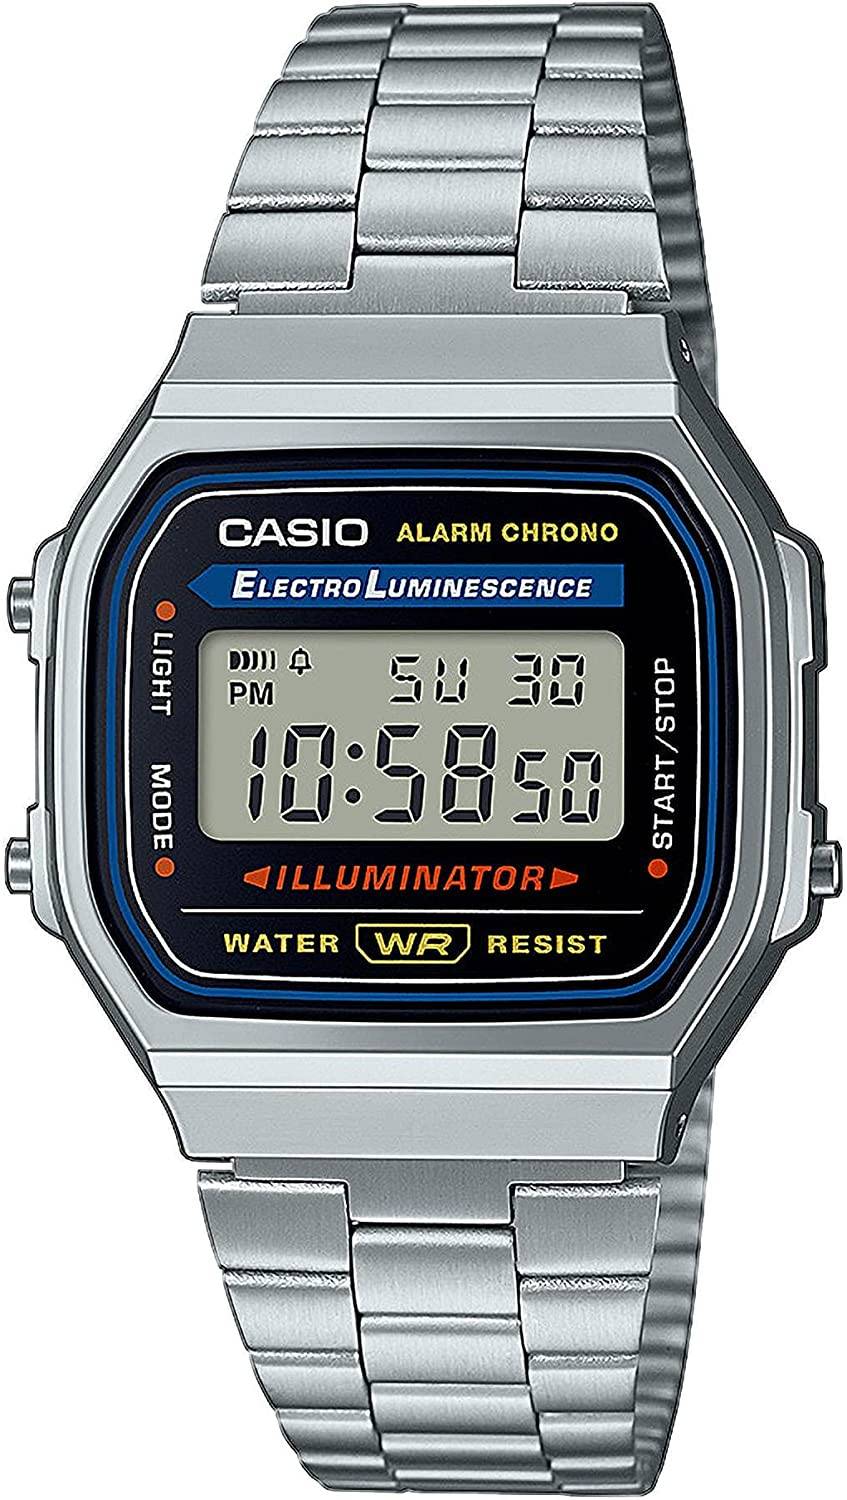 Meilleures montres Casio